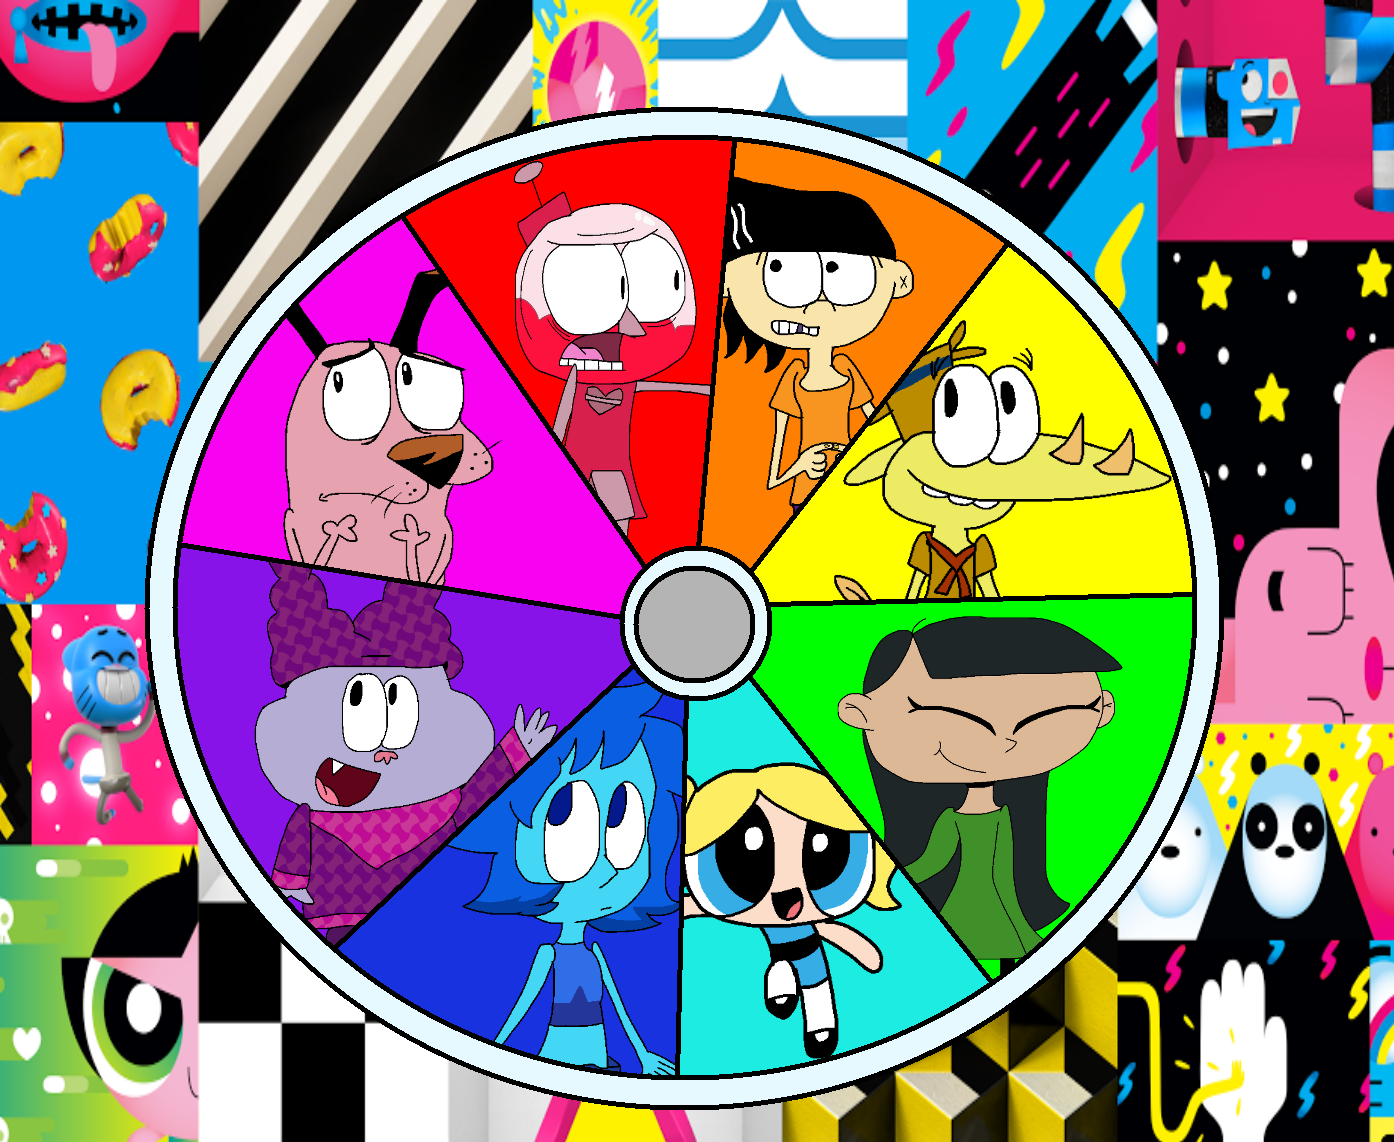 Cartoon Network Website Redesign - Jogos by DeterminationCorgi on DeviantArt